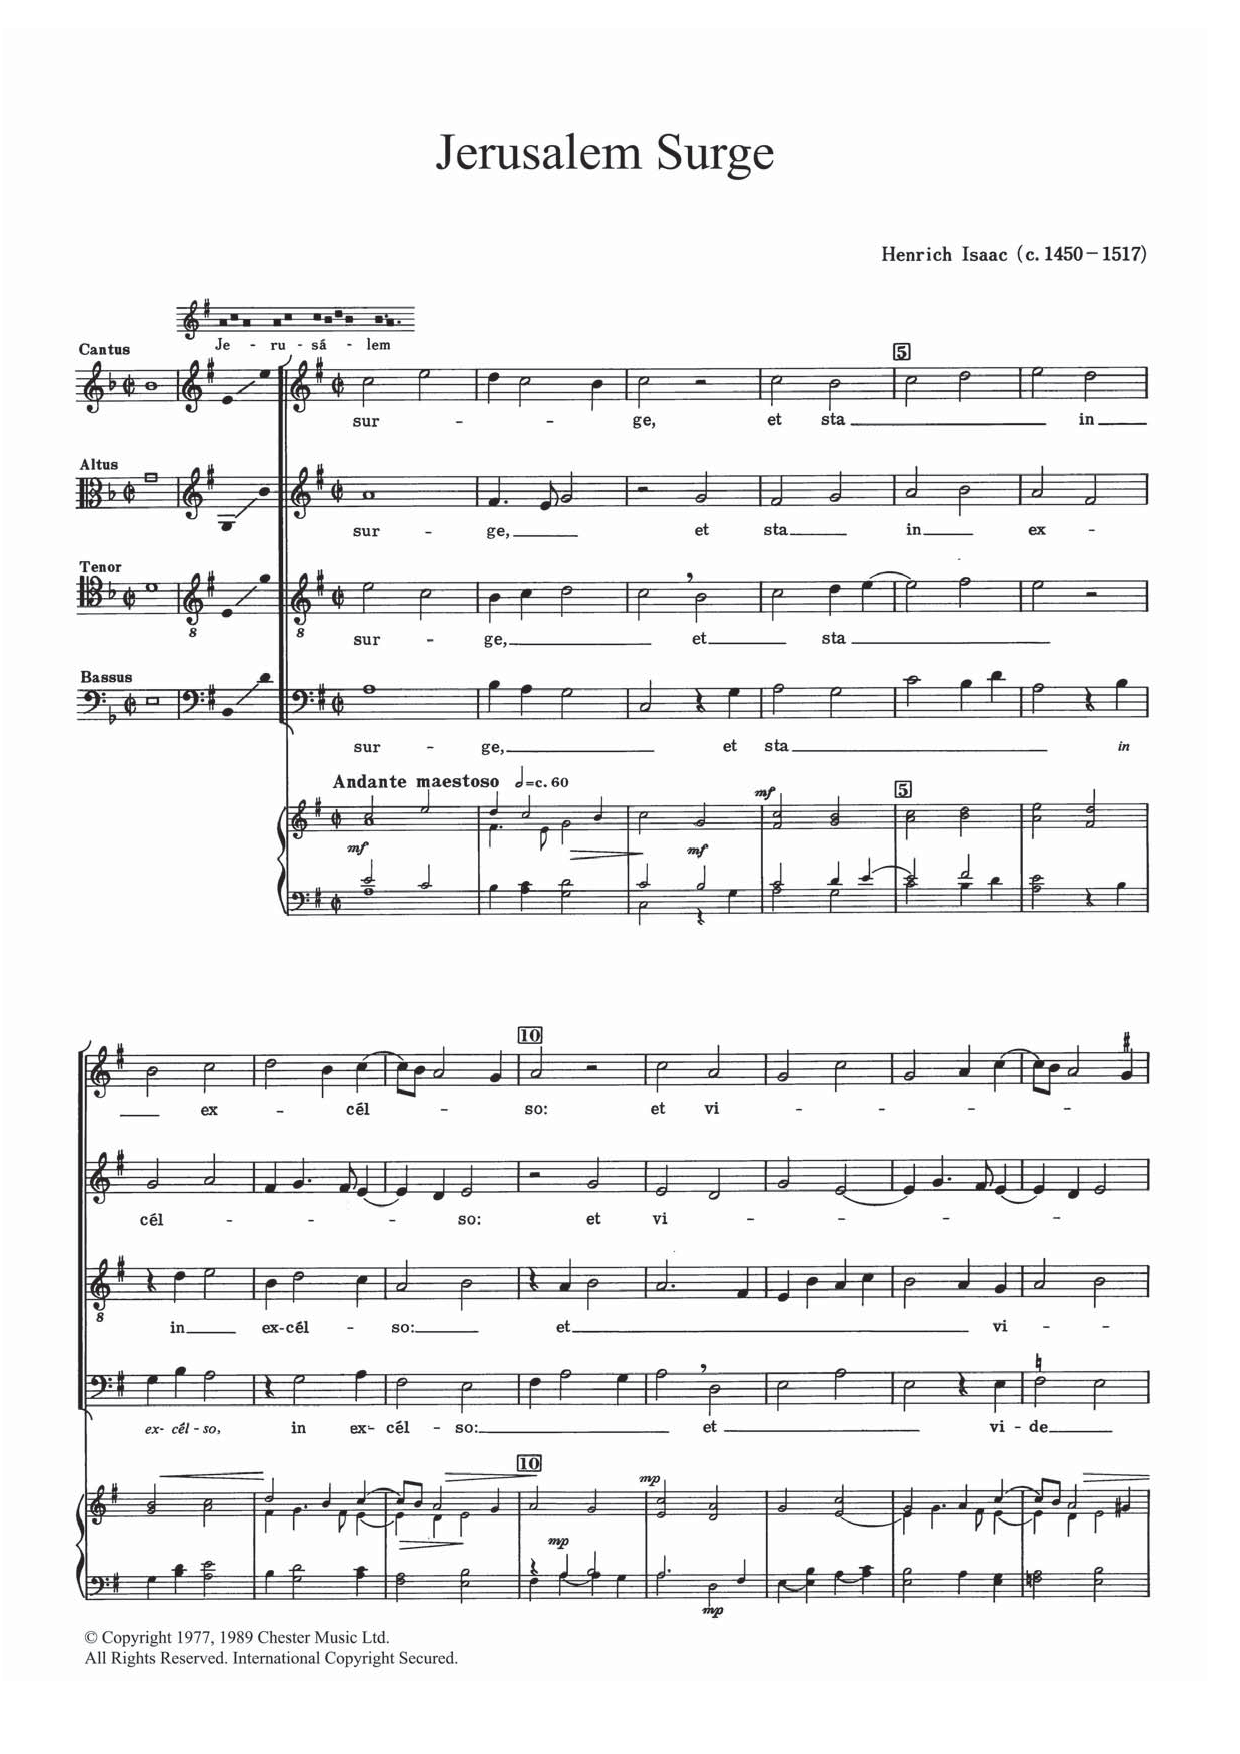 Heinrich Isaac Jerusalem Surge Sheet Music Notes & Chords for SATB - Download or Print PDF